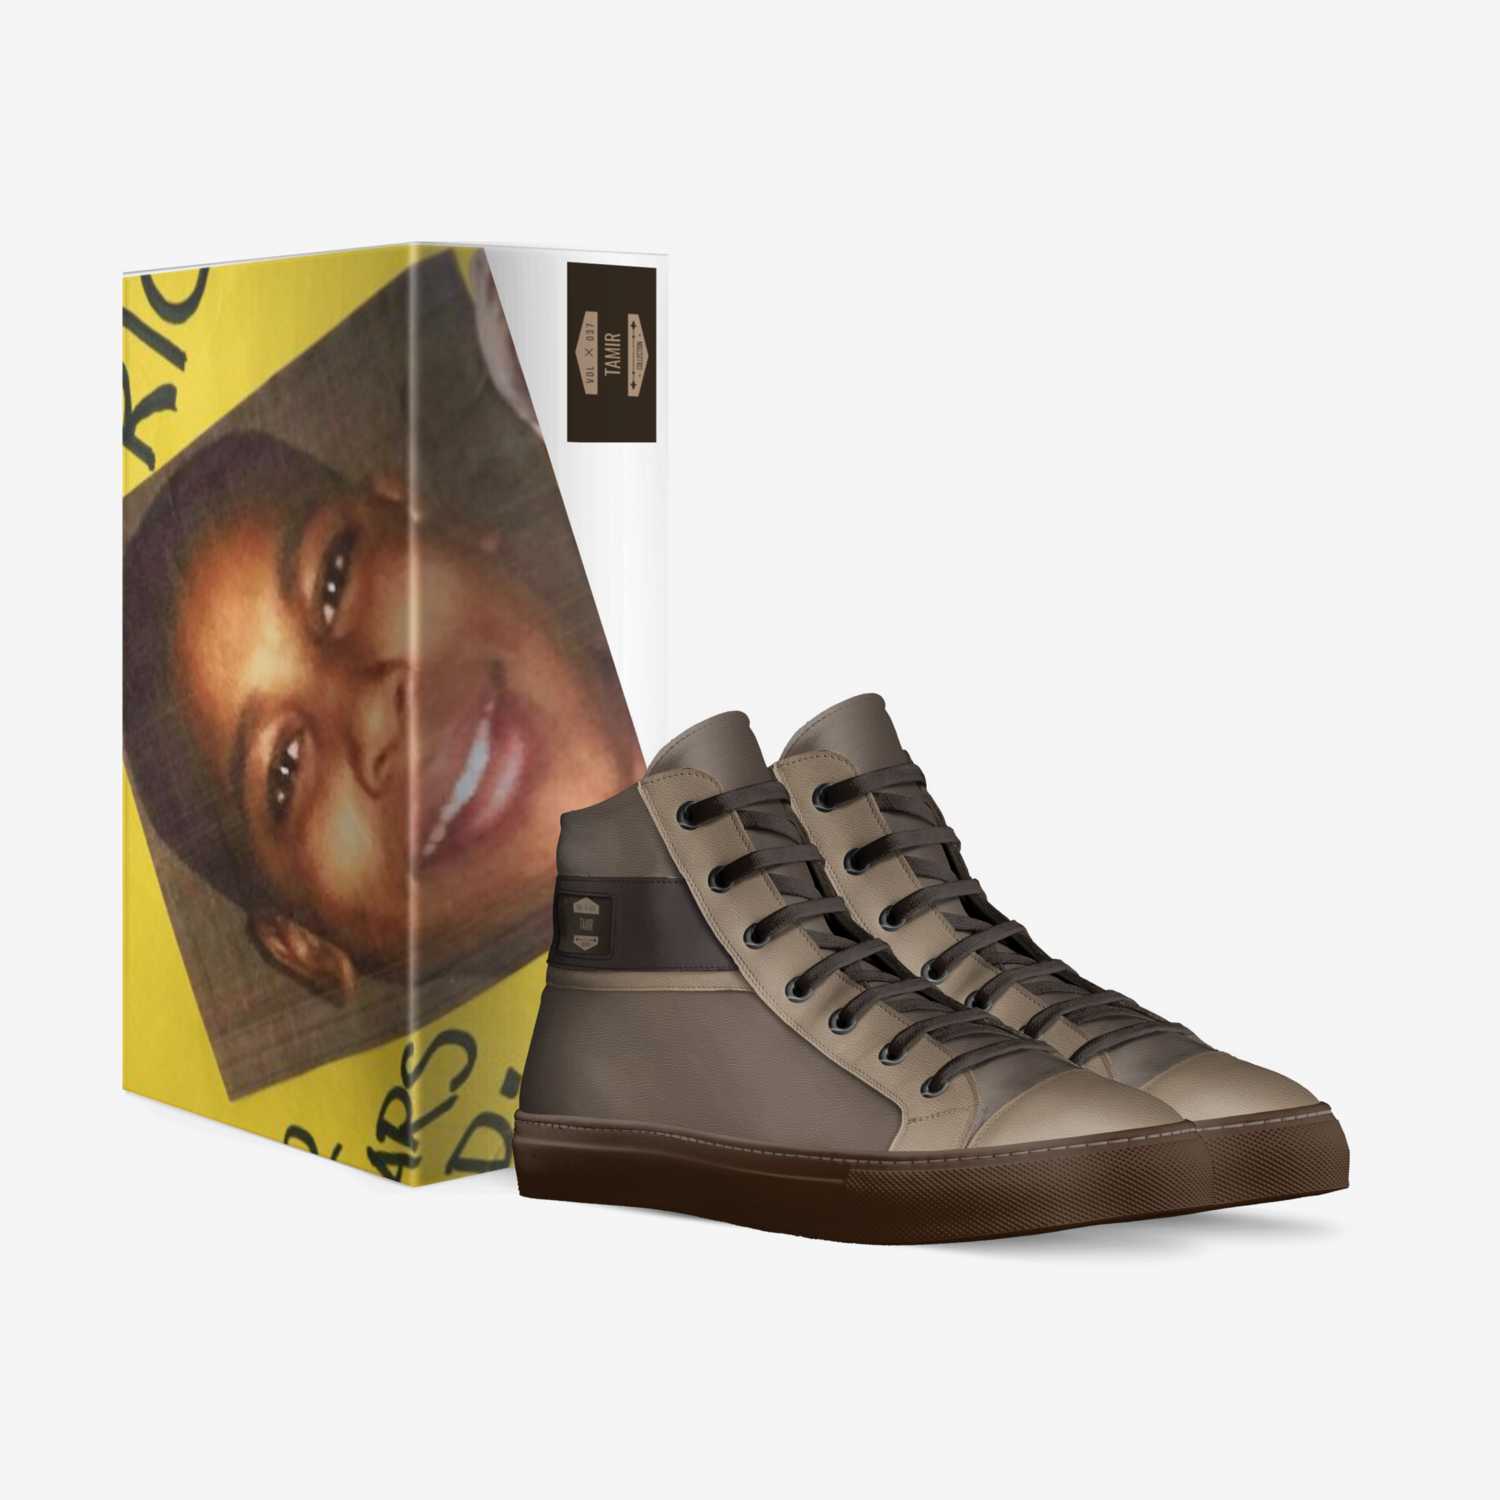 Tamir custom made in Italy shoes by Moffatt Gordon | Box view